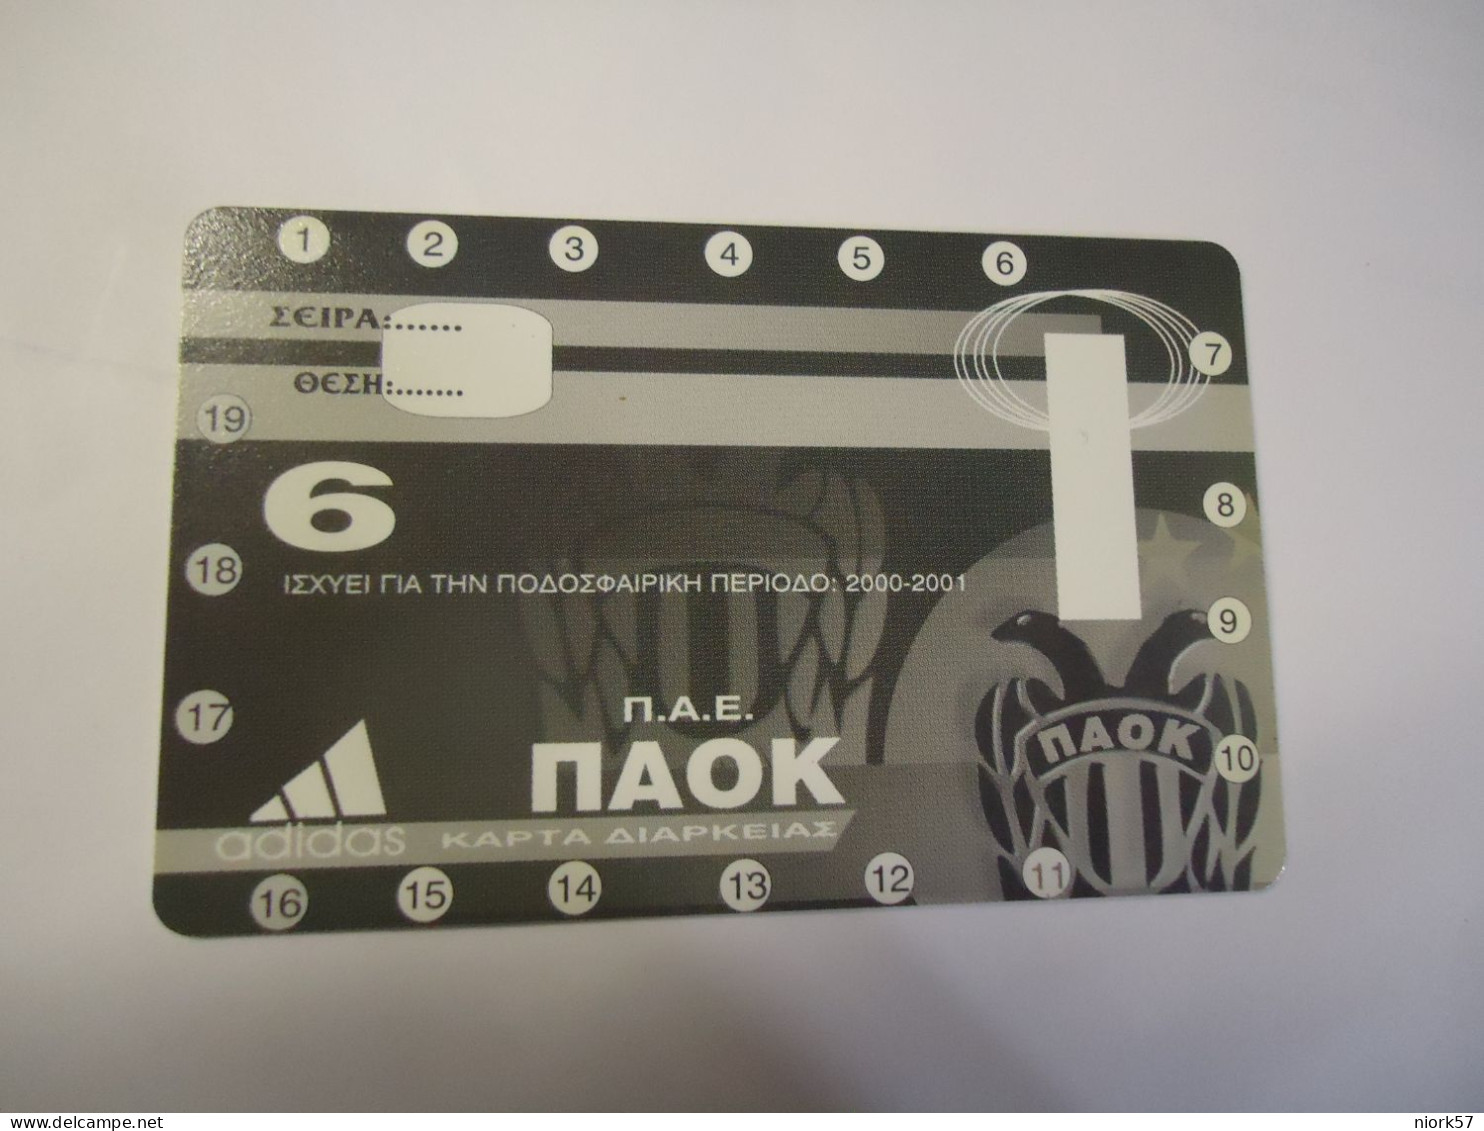 GREECE USED   CARDS   SPORTS FOOTBALL  Π.Α.Ε ΠΑΟK - Sport